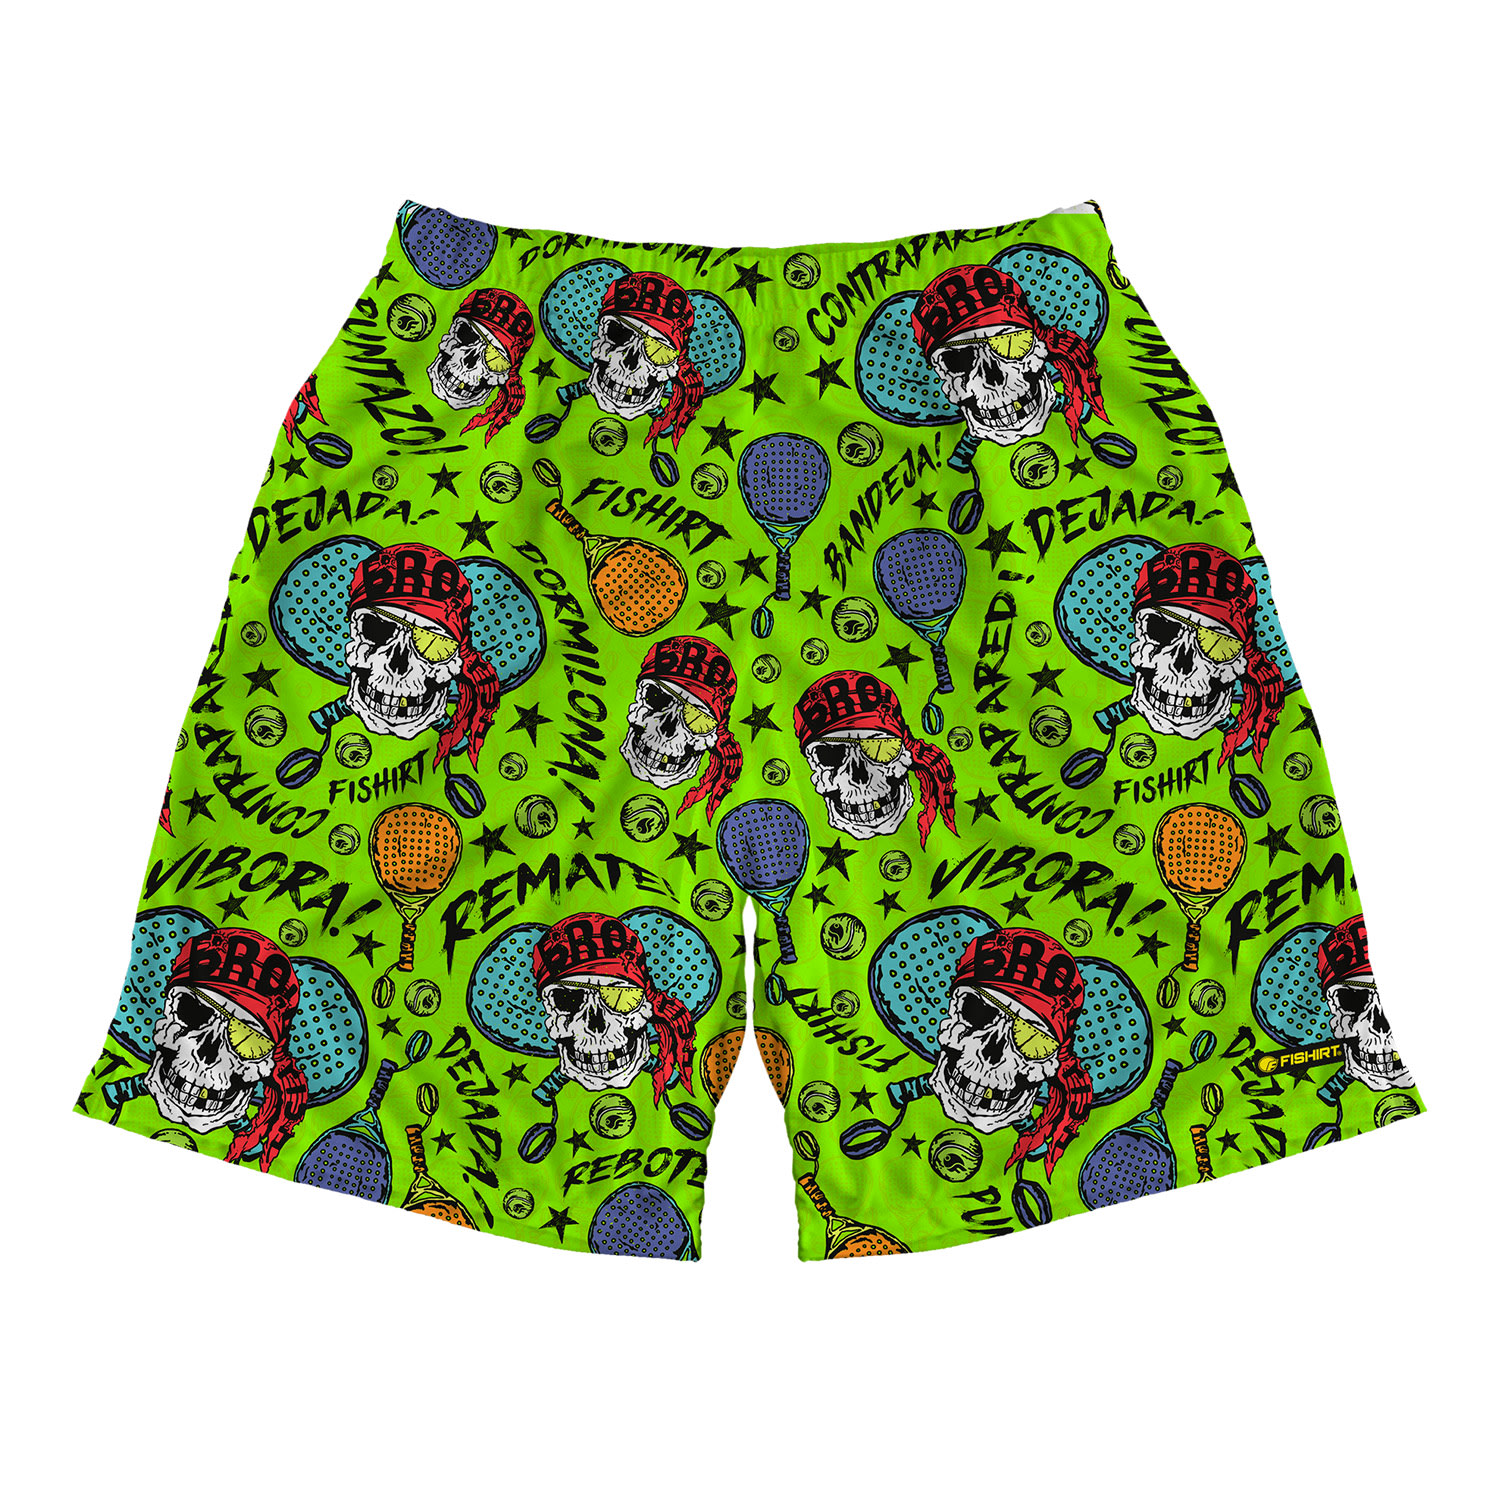 Men’s Green Activewear Shorts Pirate Skull Graphic Vibora Style - Lime Medium Fishirt